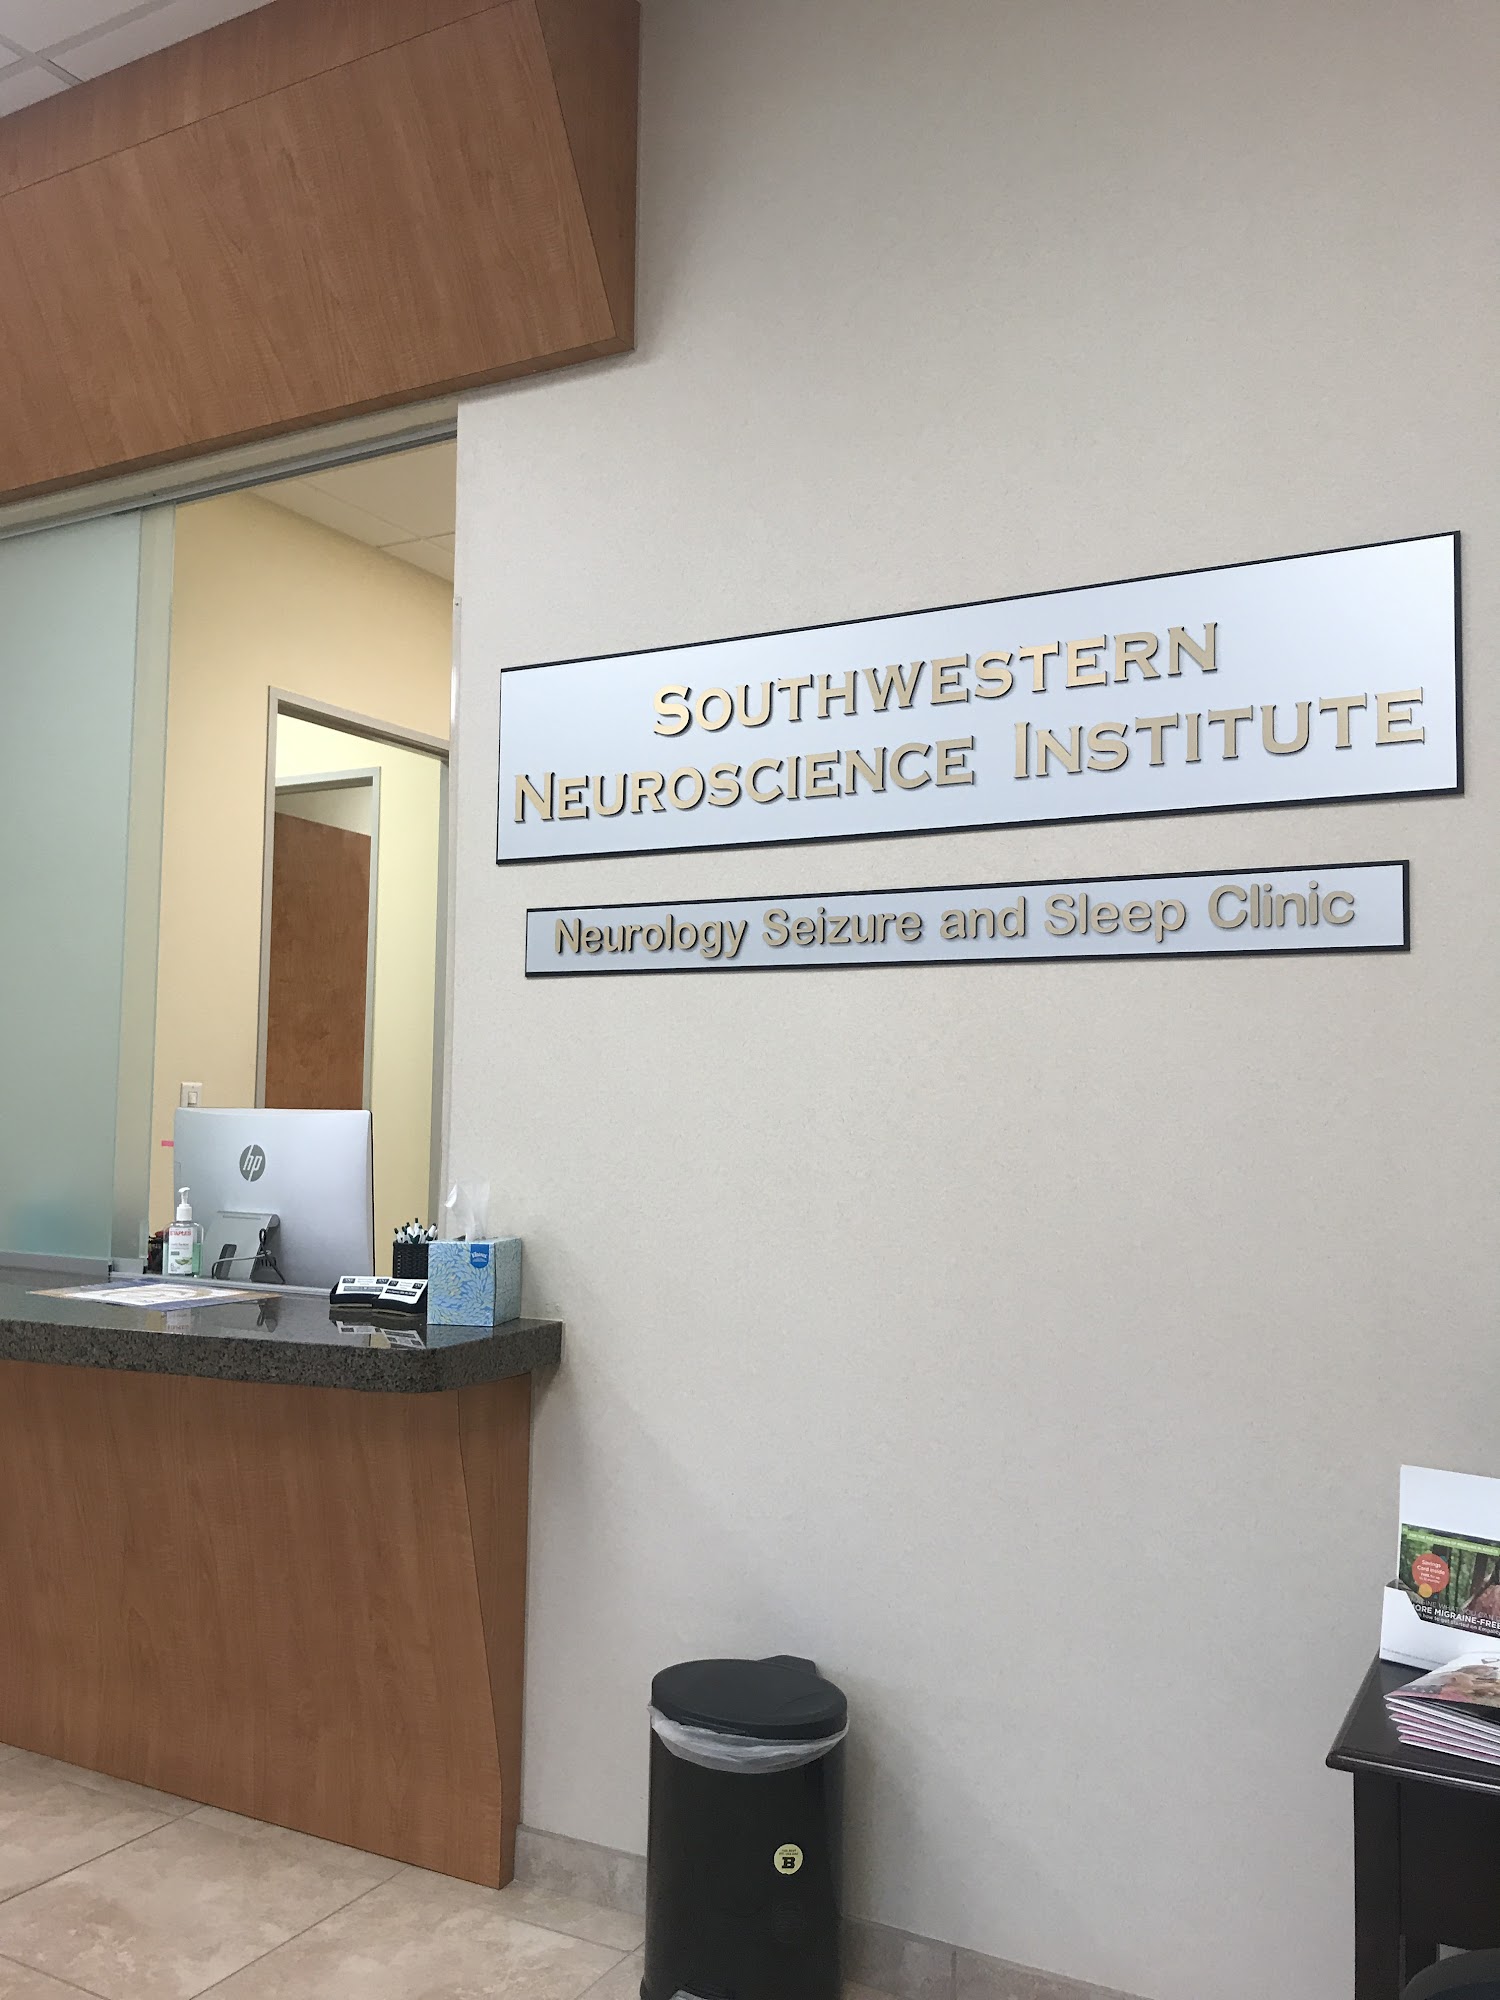 Southwestern Neuroscience Institute